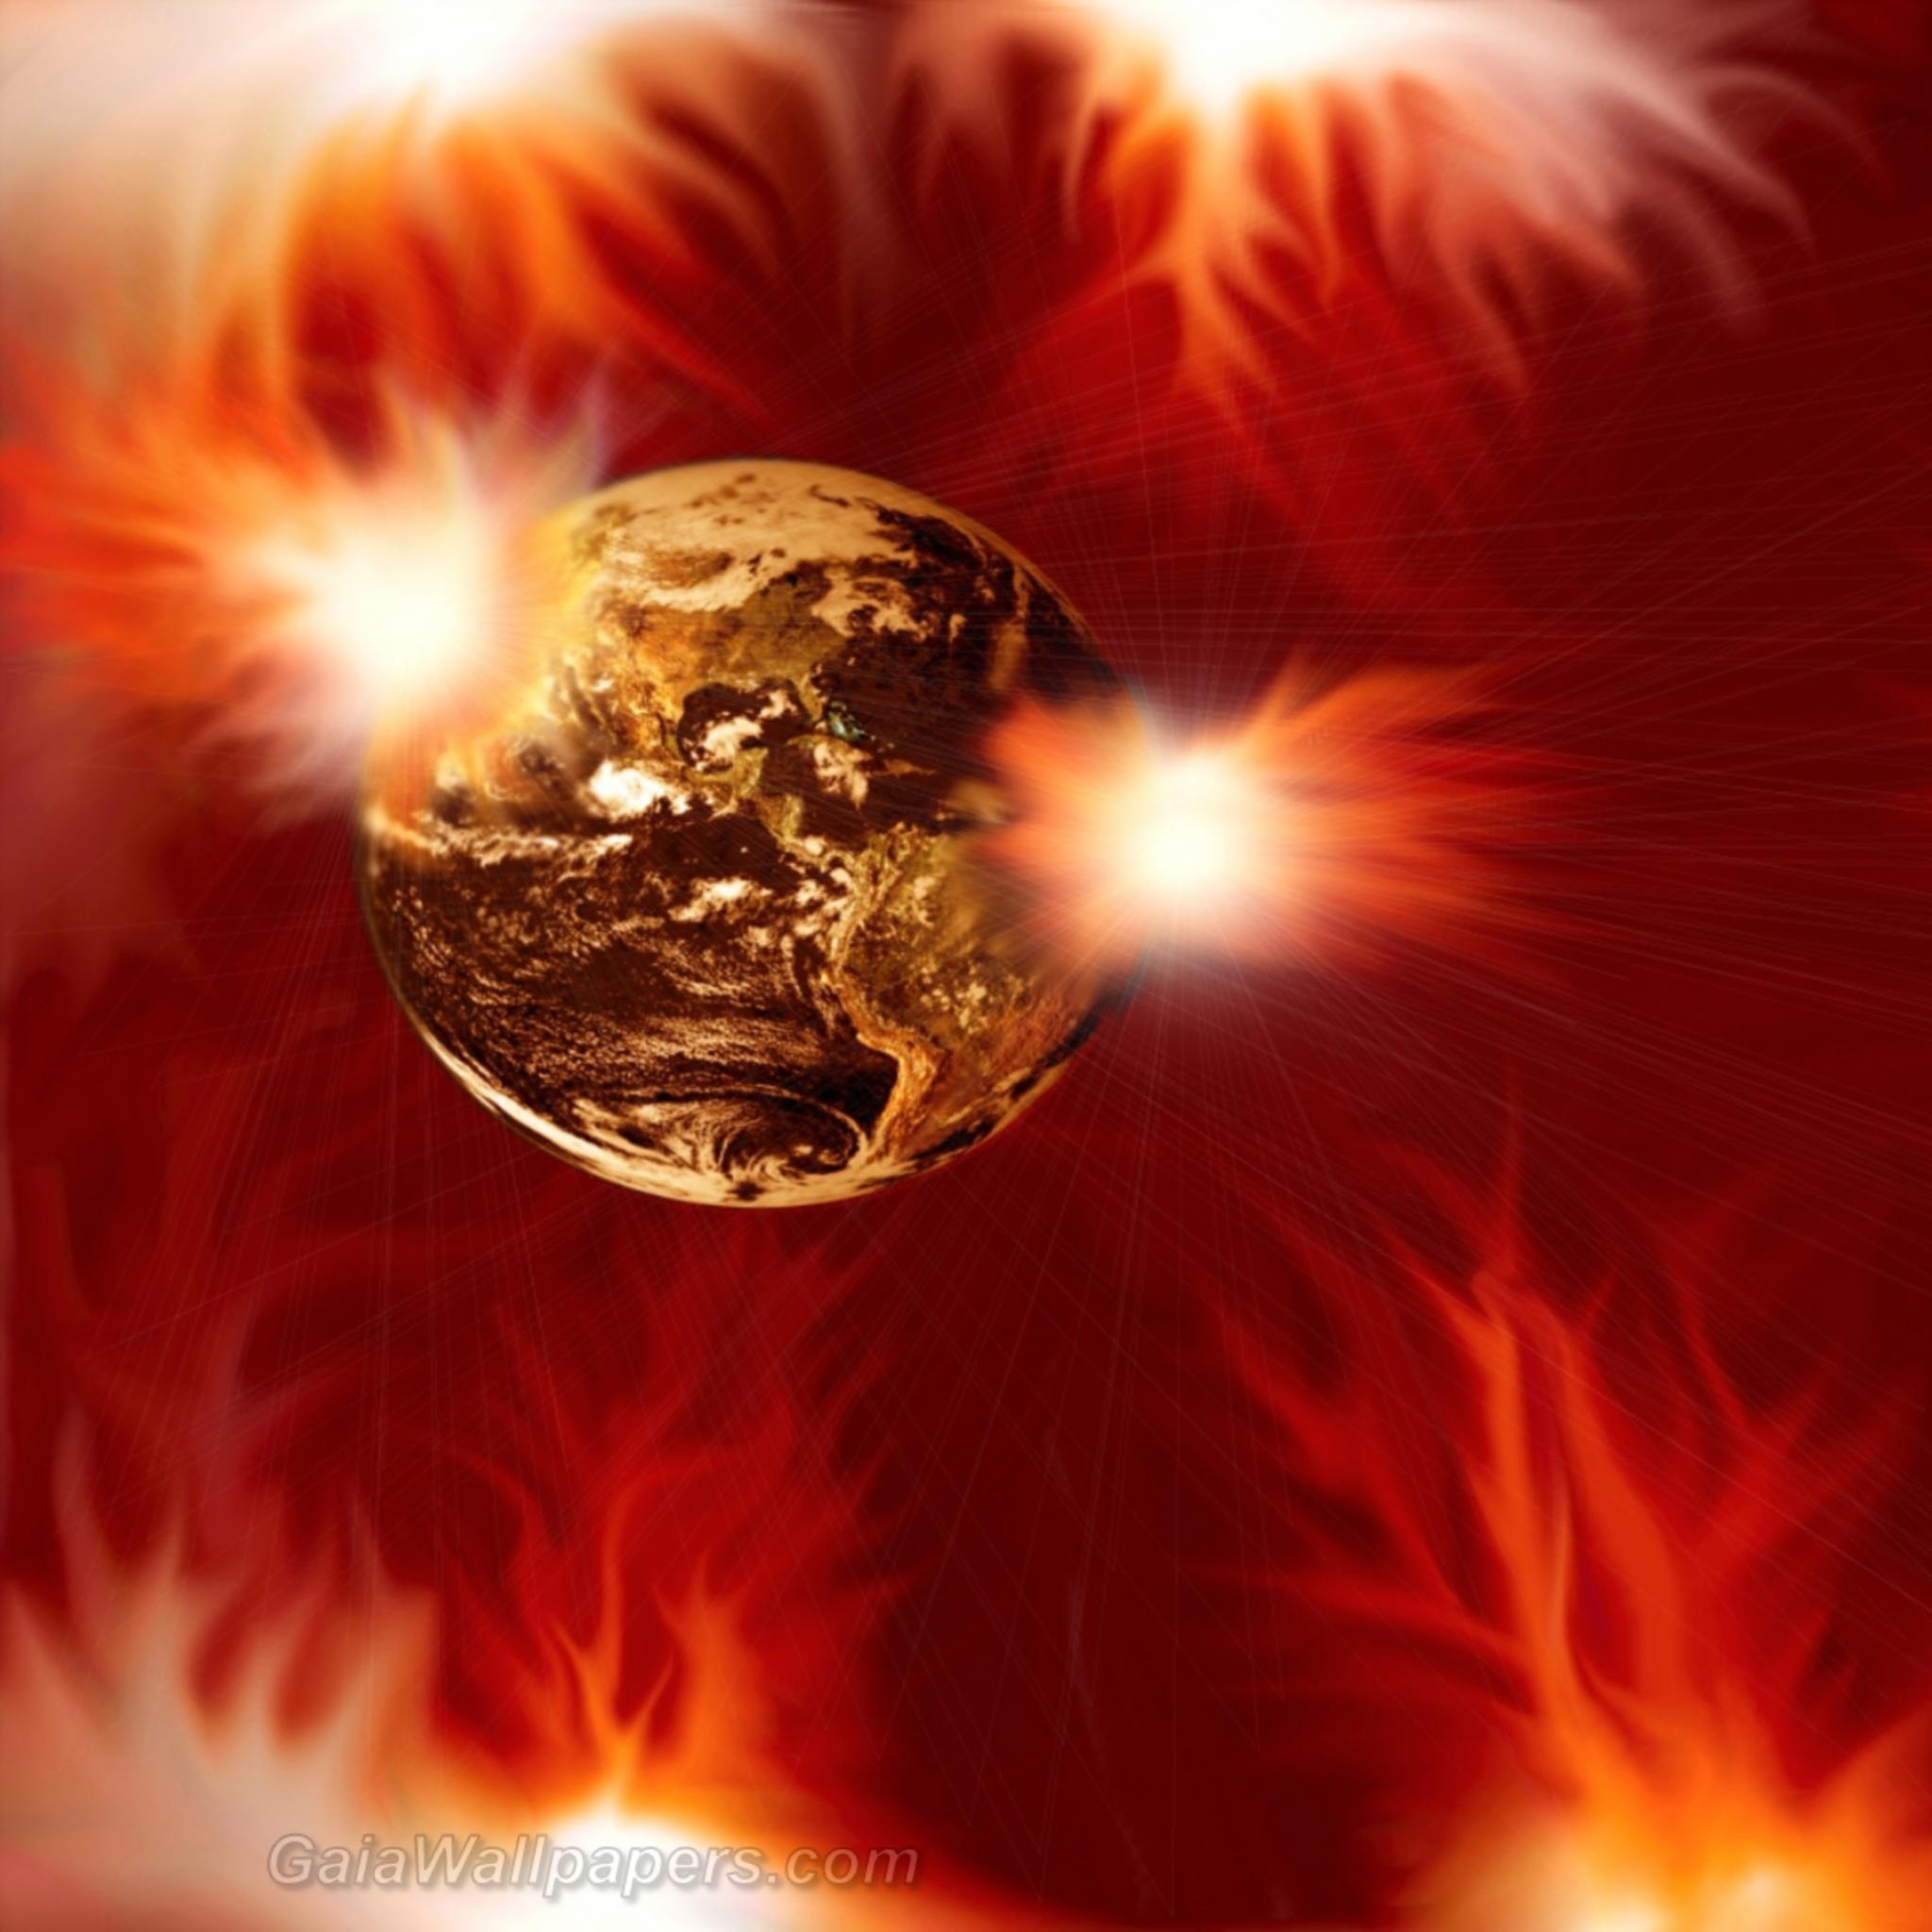 Lost earth in a fire universe - Free desktop wallpapers